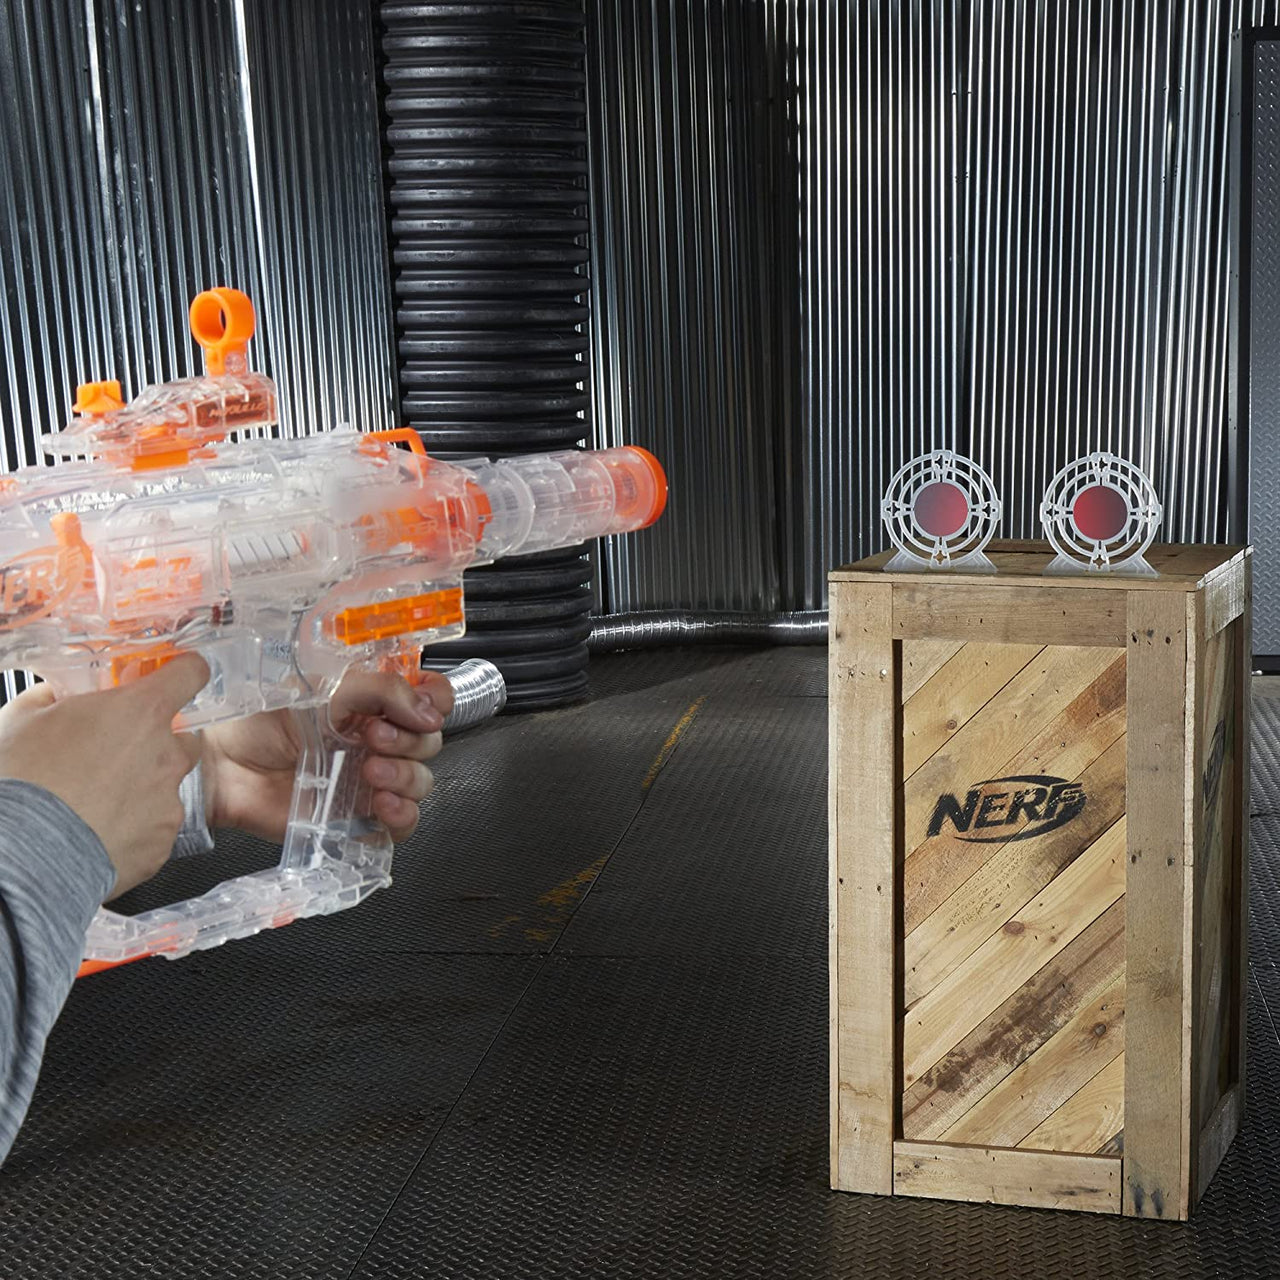 Nerf E1620 Reflective Targeting Kit